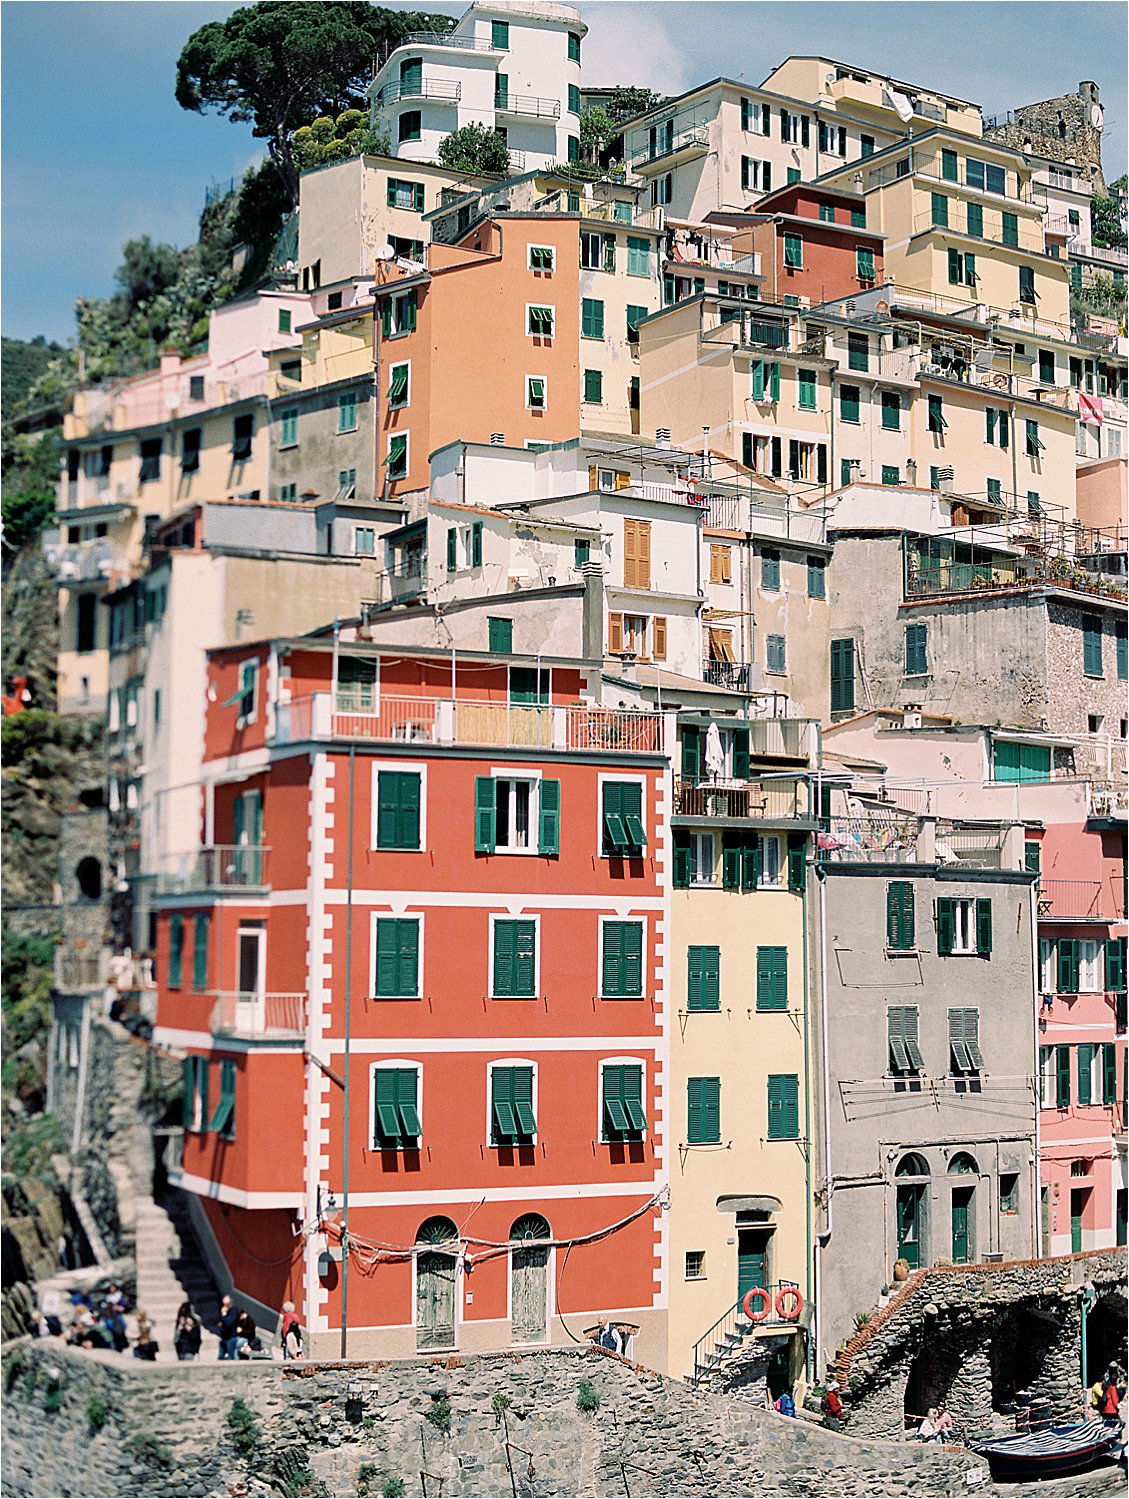 Riomaggiore, Cinque Terre, Italy on film with destination wedding film photographer Renee Hollingshead